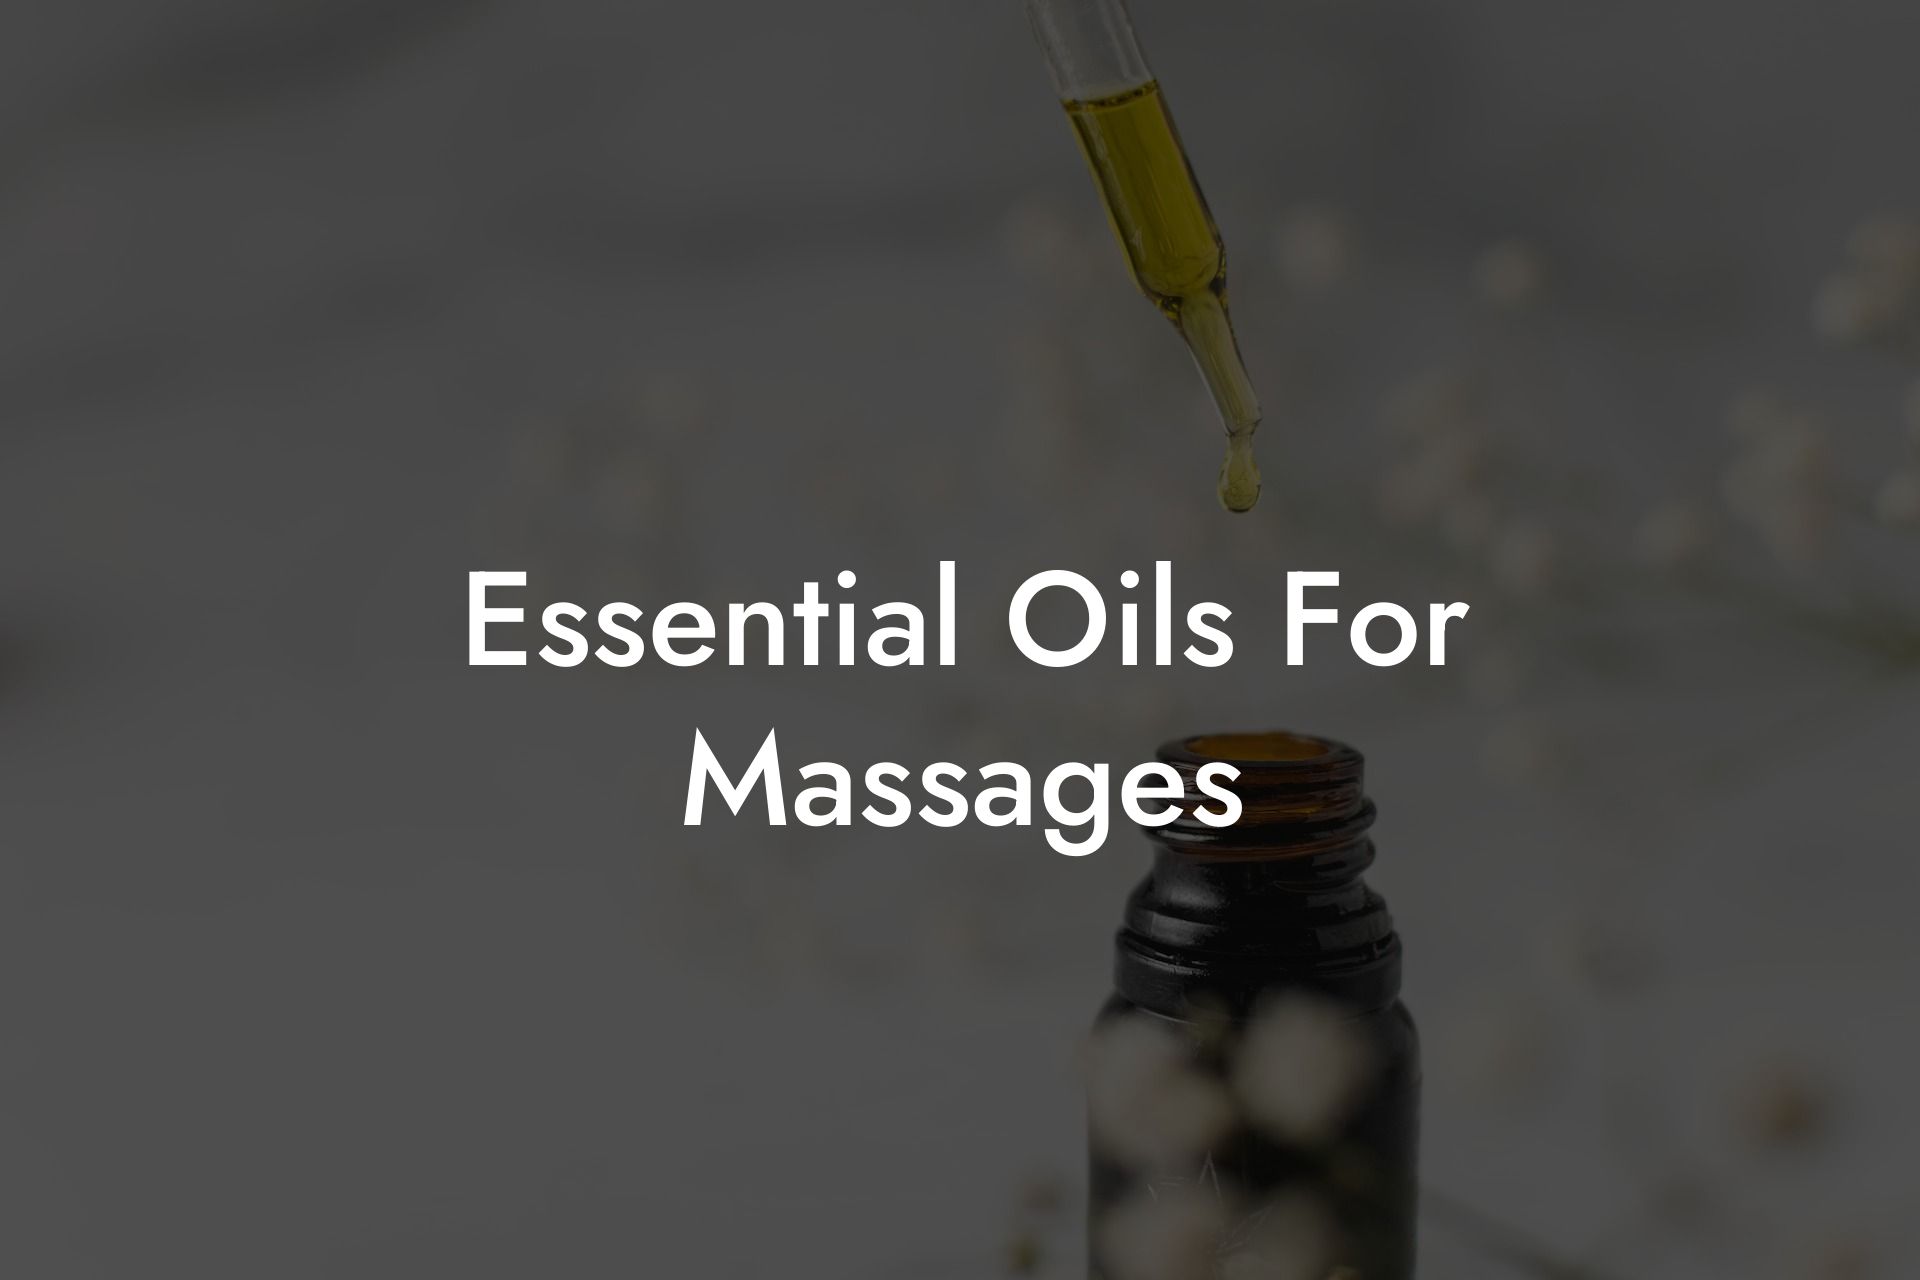 Essential Oils For Massages